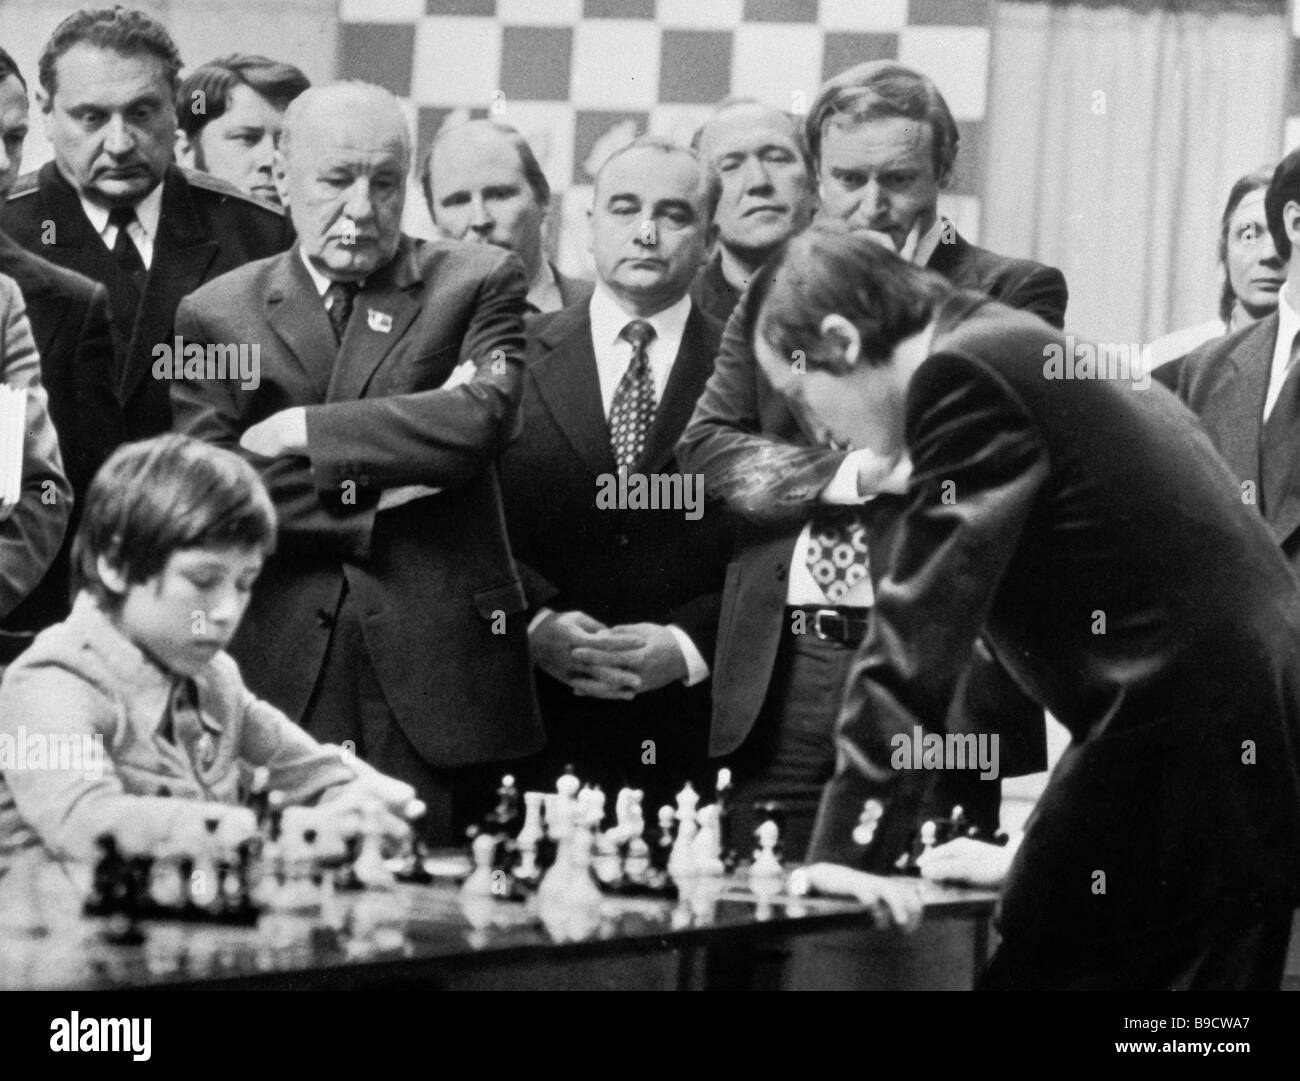 World chess champion Anatoly Karpov center with his mother Nina